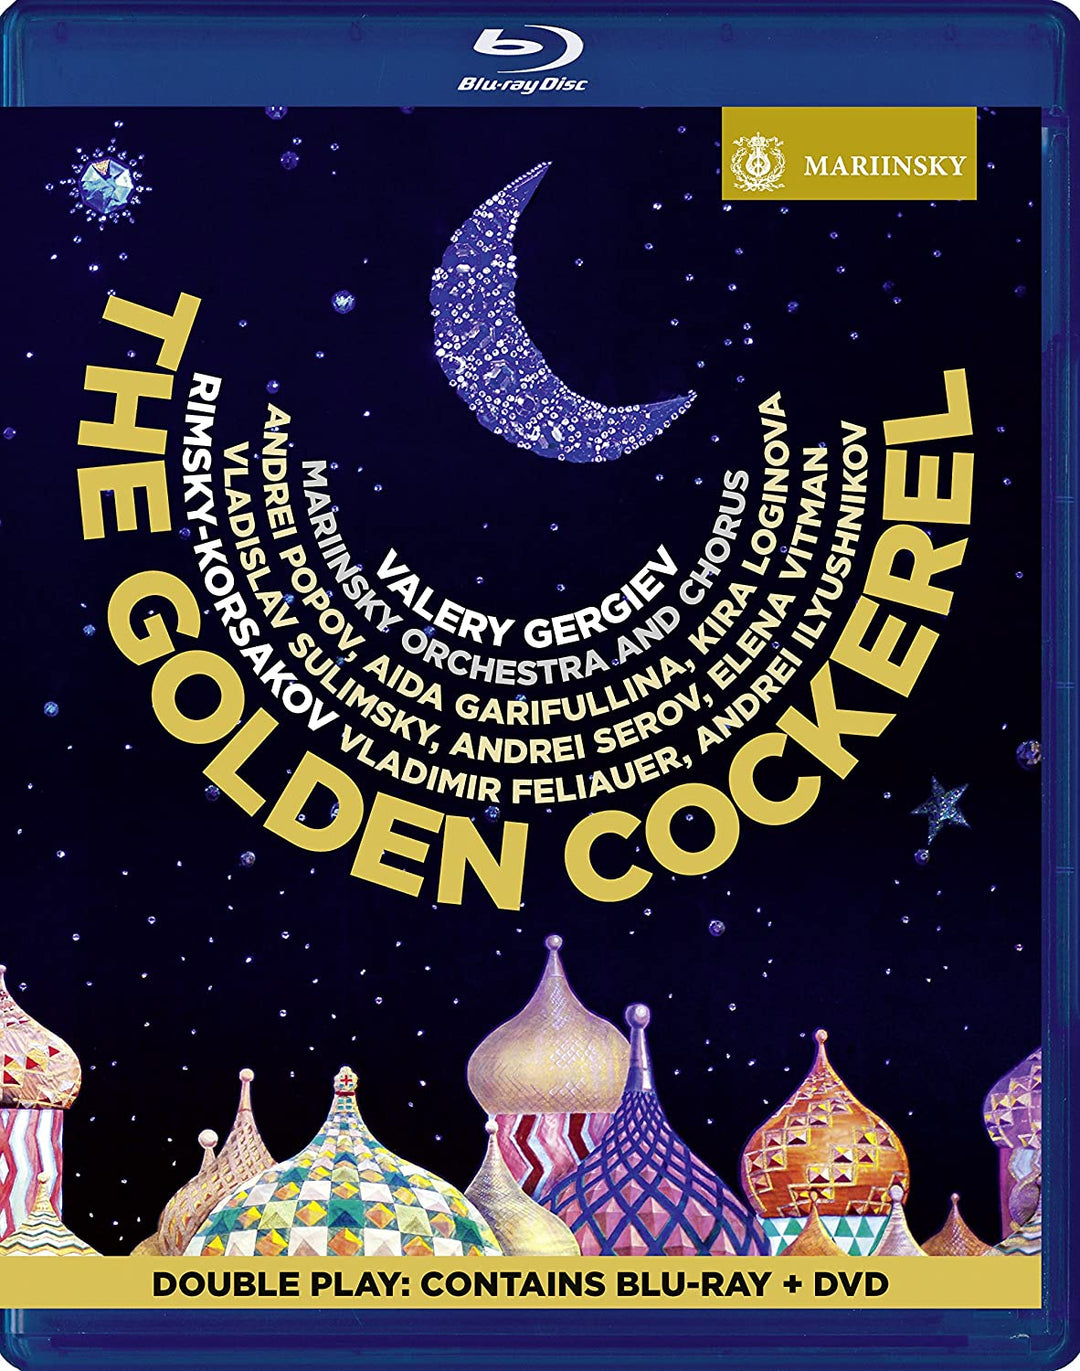 Rimsky-Korsakov: The Golden Cockerel (Mariinsky Orchestra & Chorus / Valery Gergiev) (Double Play)] [2017] - [DVD]